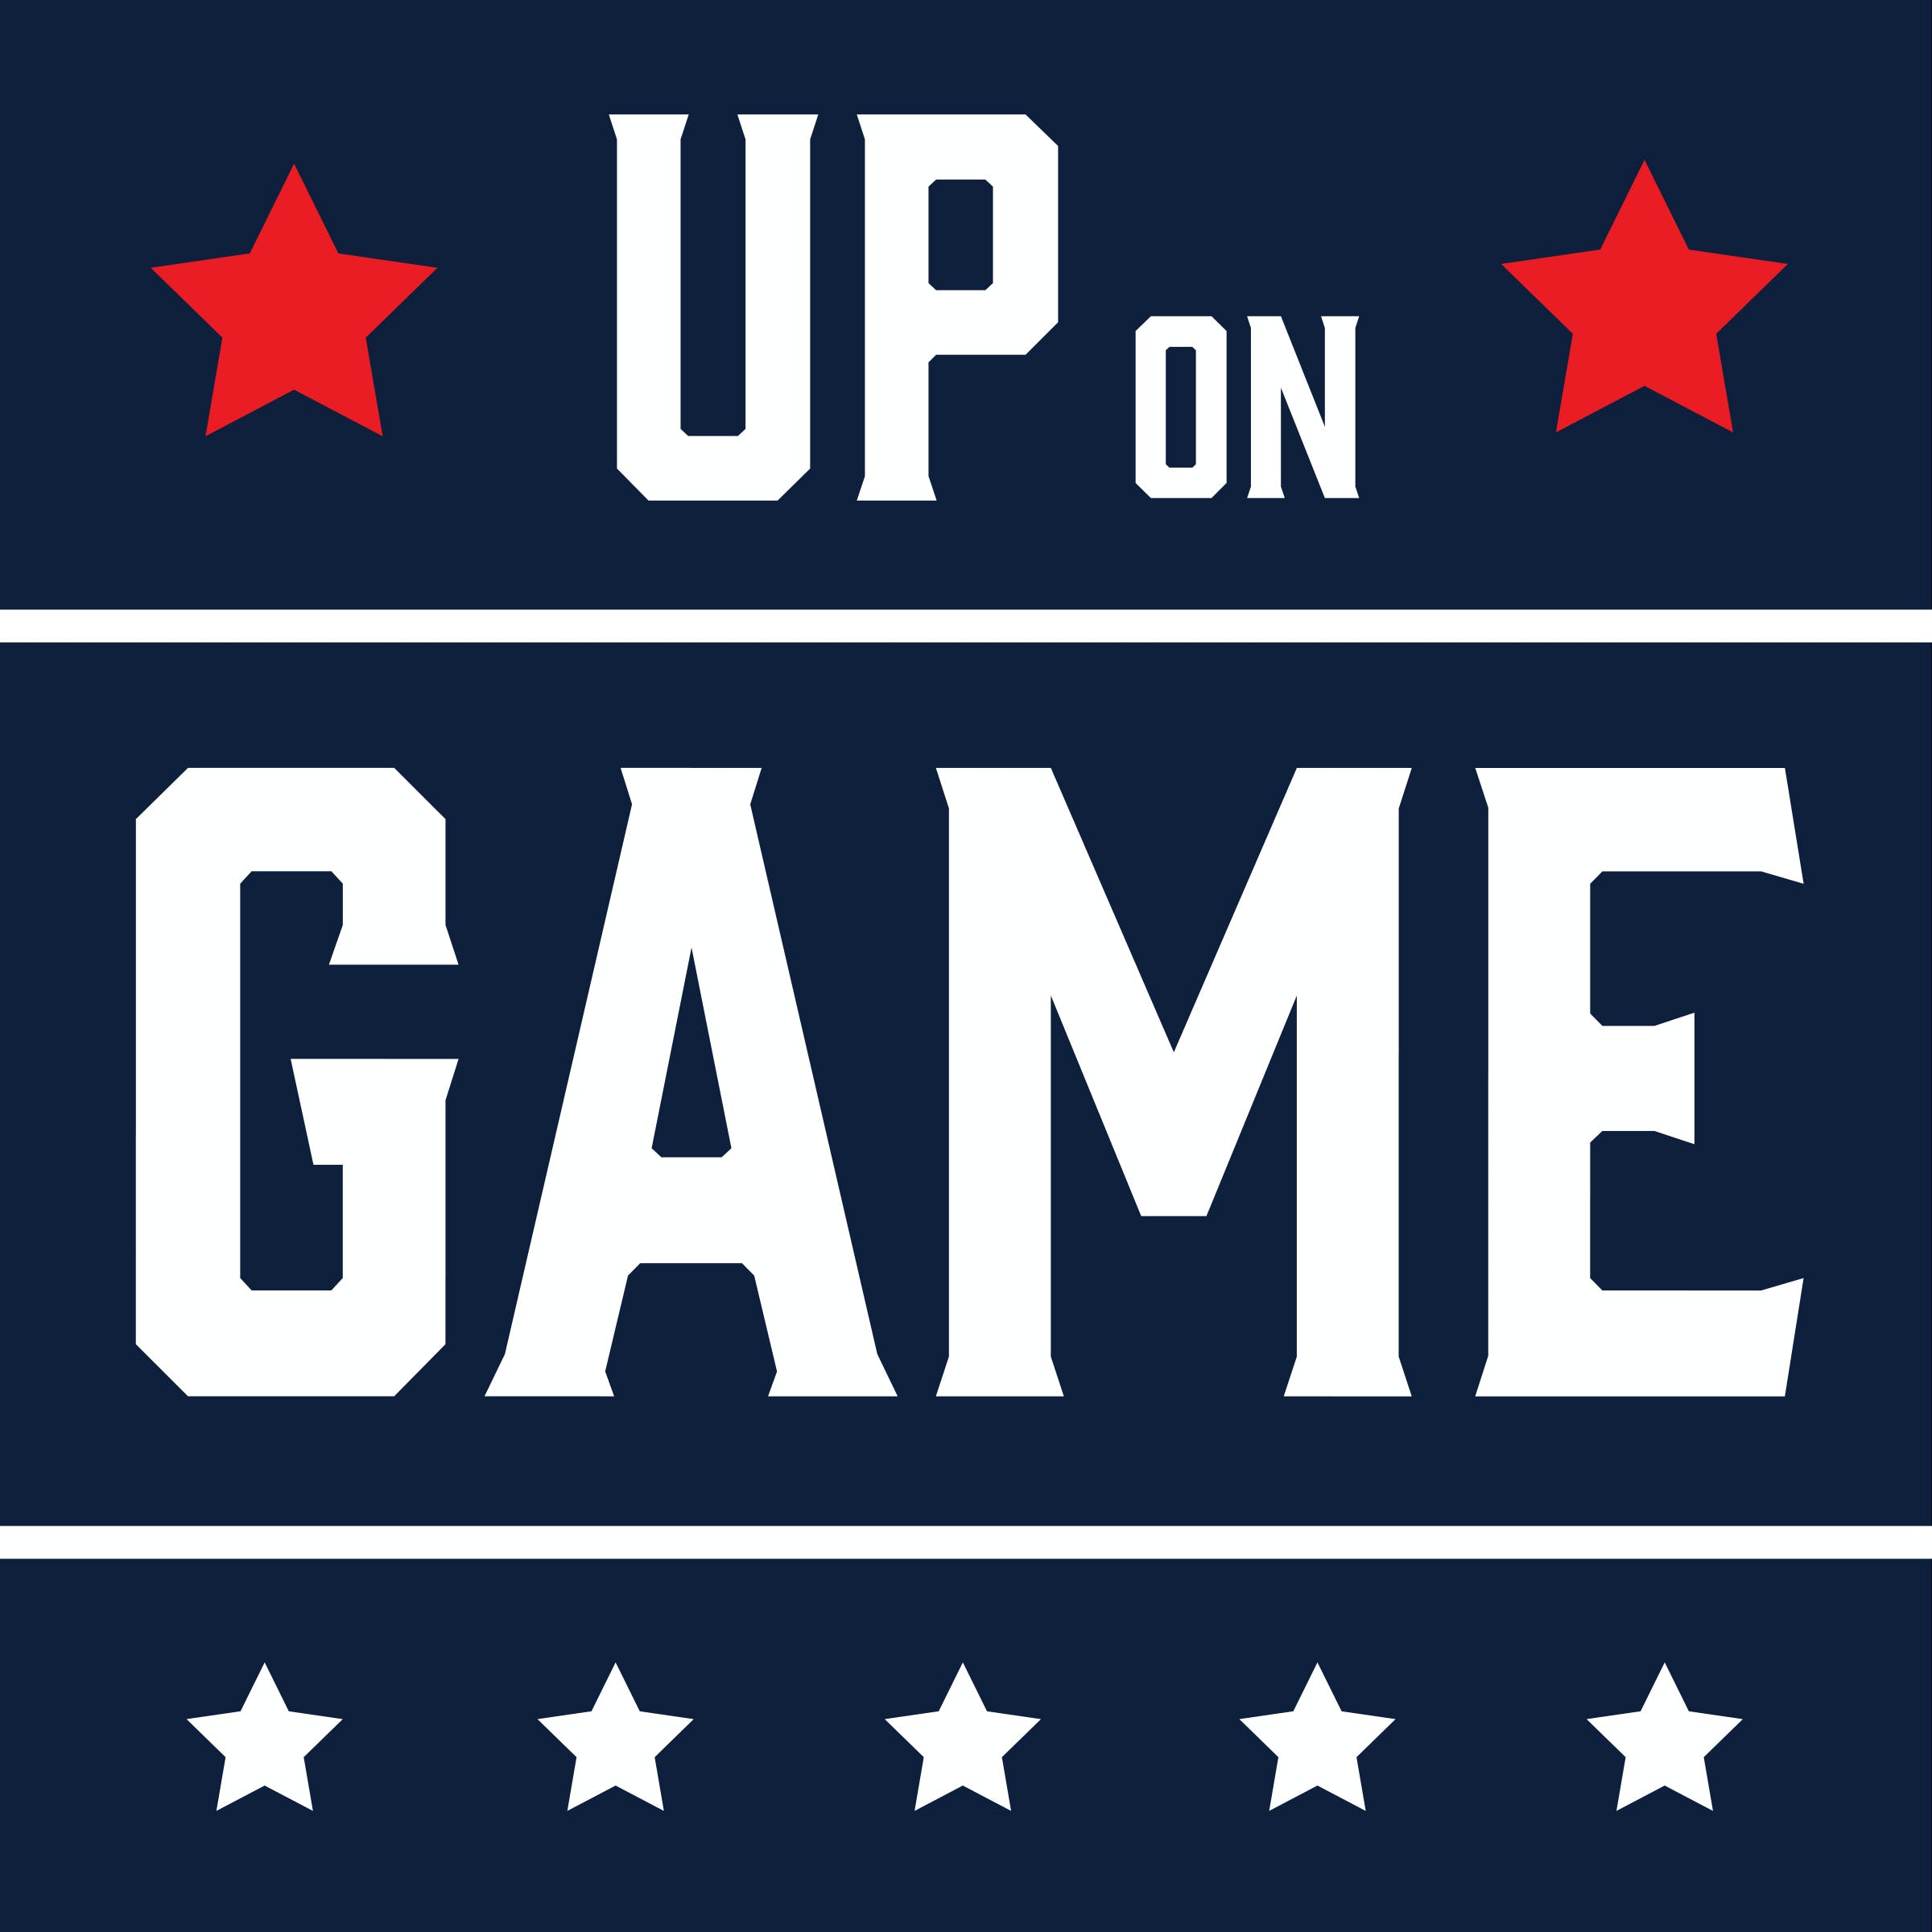 Up on Game: Hour 2 – Cowboys @ Niners, Travis Kelce,